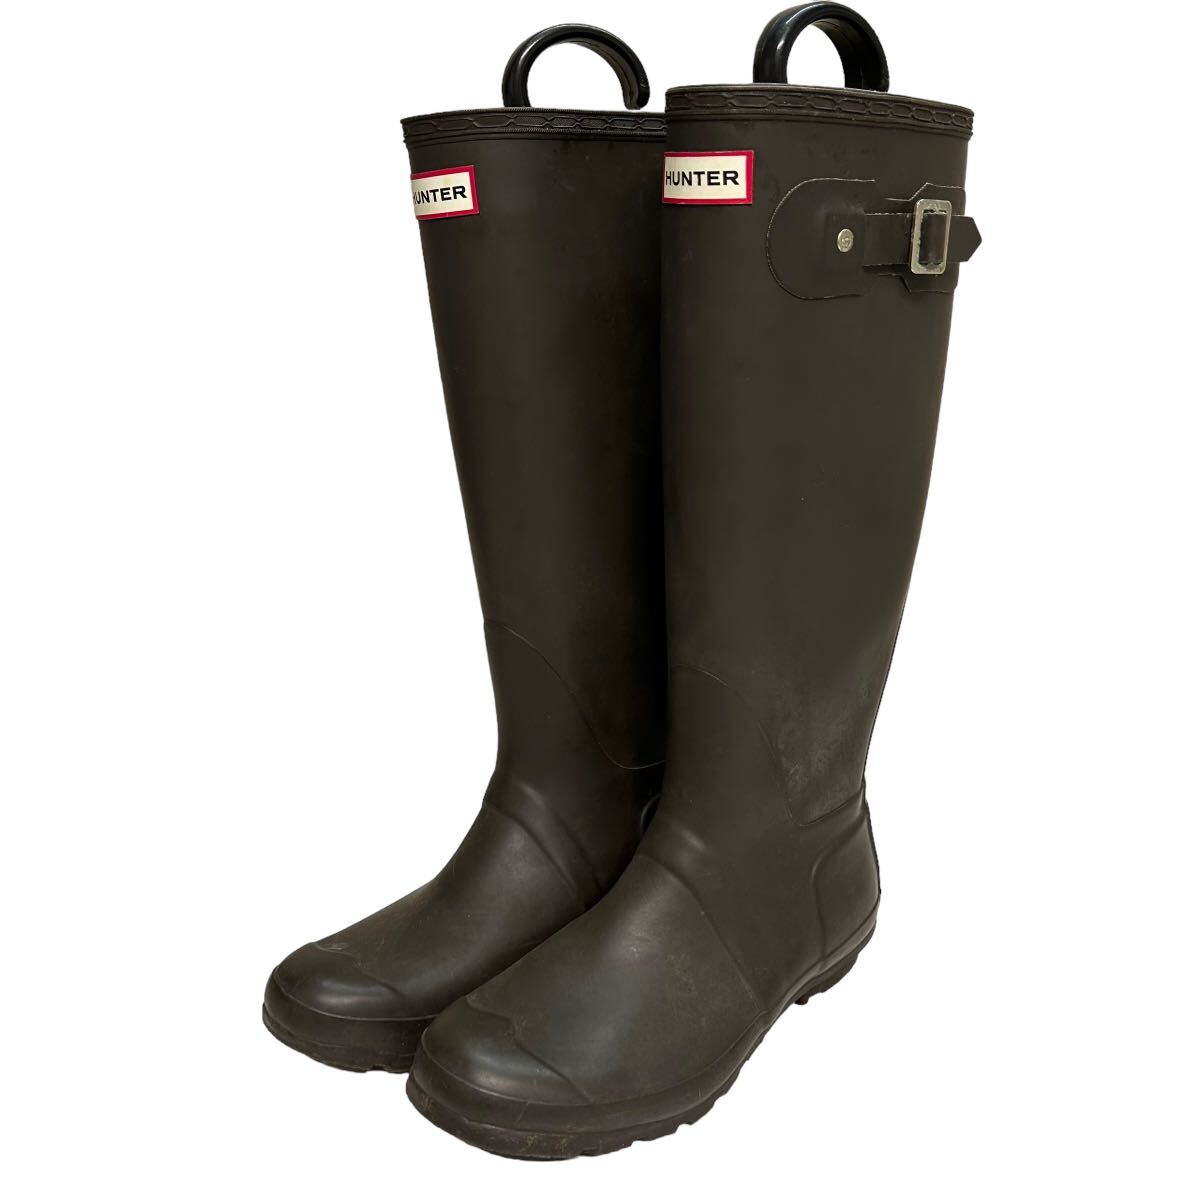 A847 HUNTER Hunter lady's rain boots boots UK5 EU38 approximately 24cm Brown Raver 